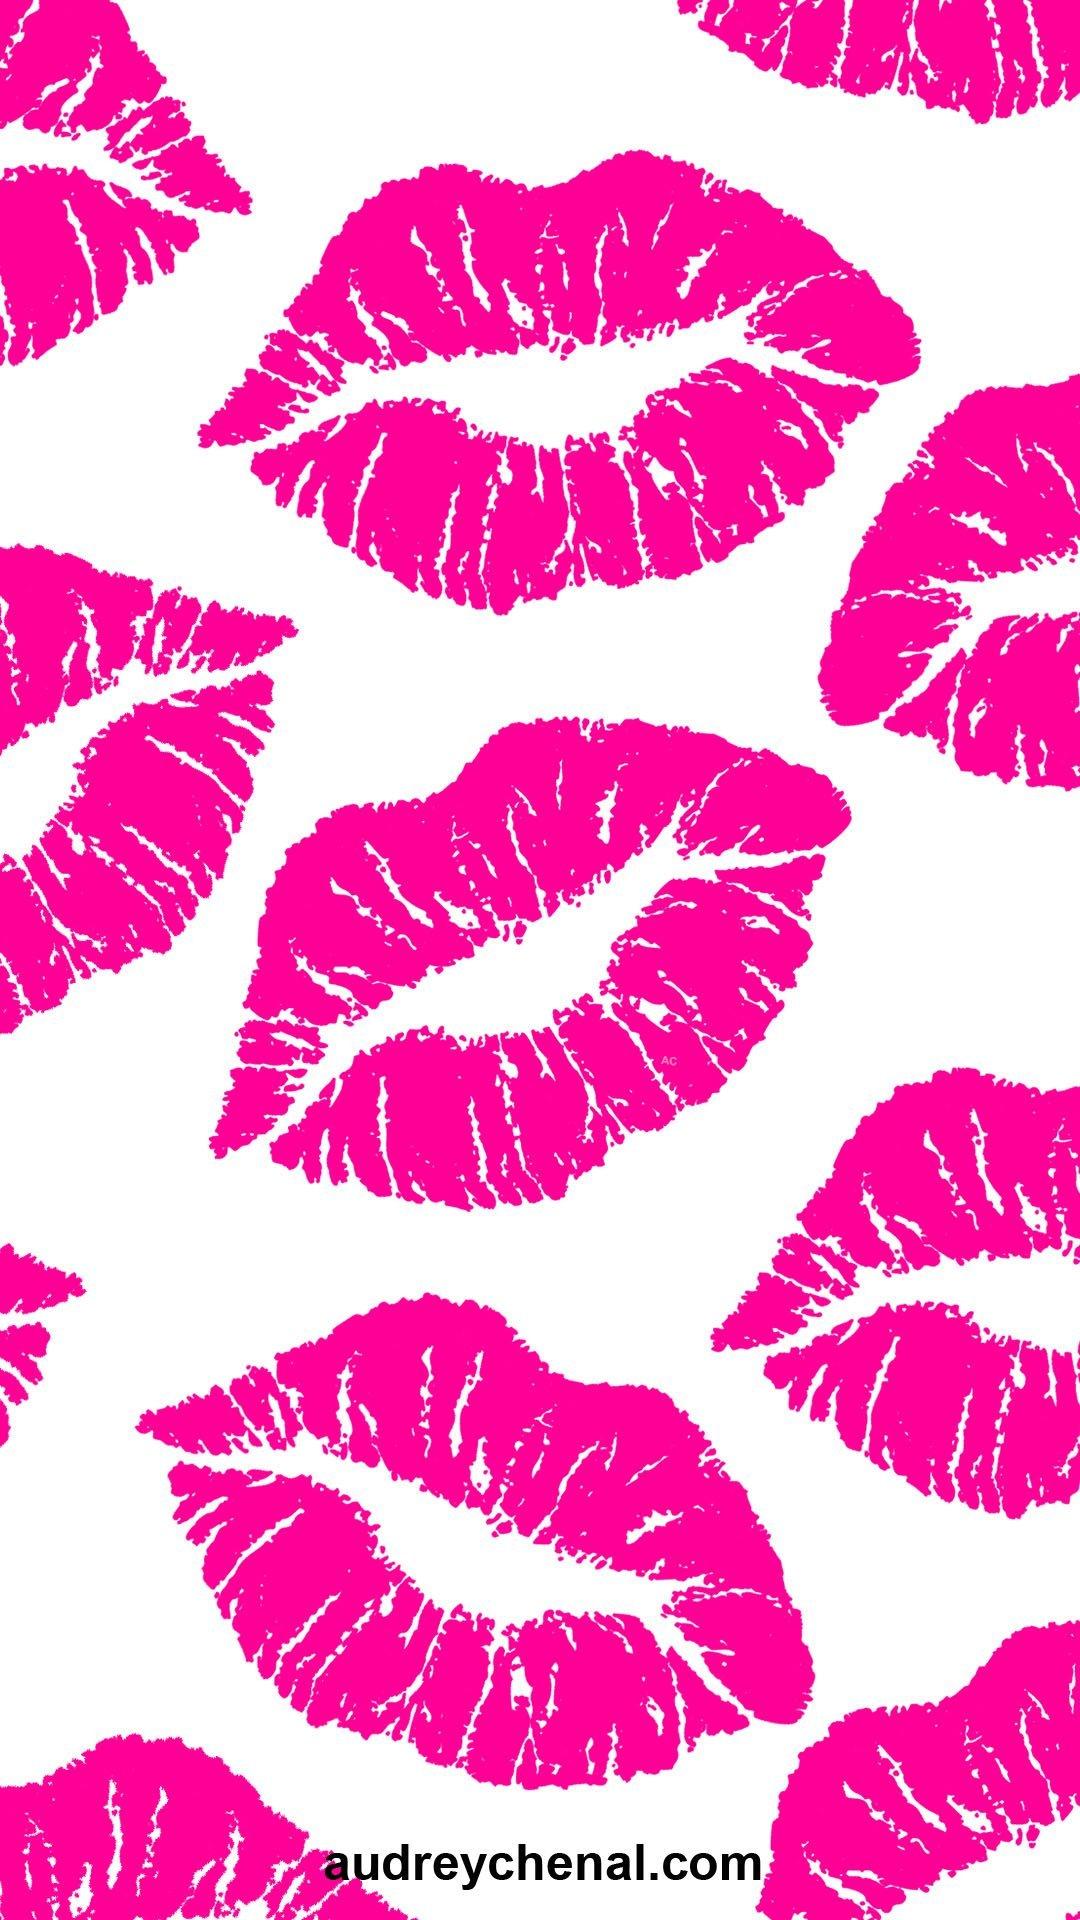 1080 x 1920 · jpeg - wallpaper neon pink lips kisses pattern by Audrey Chenal - Audrey Chenal